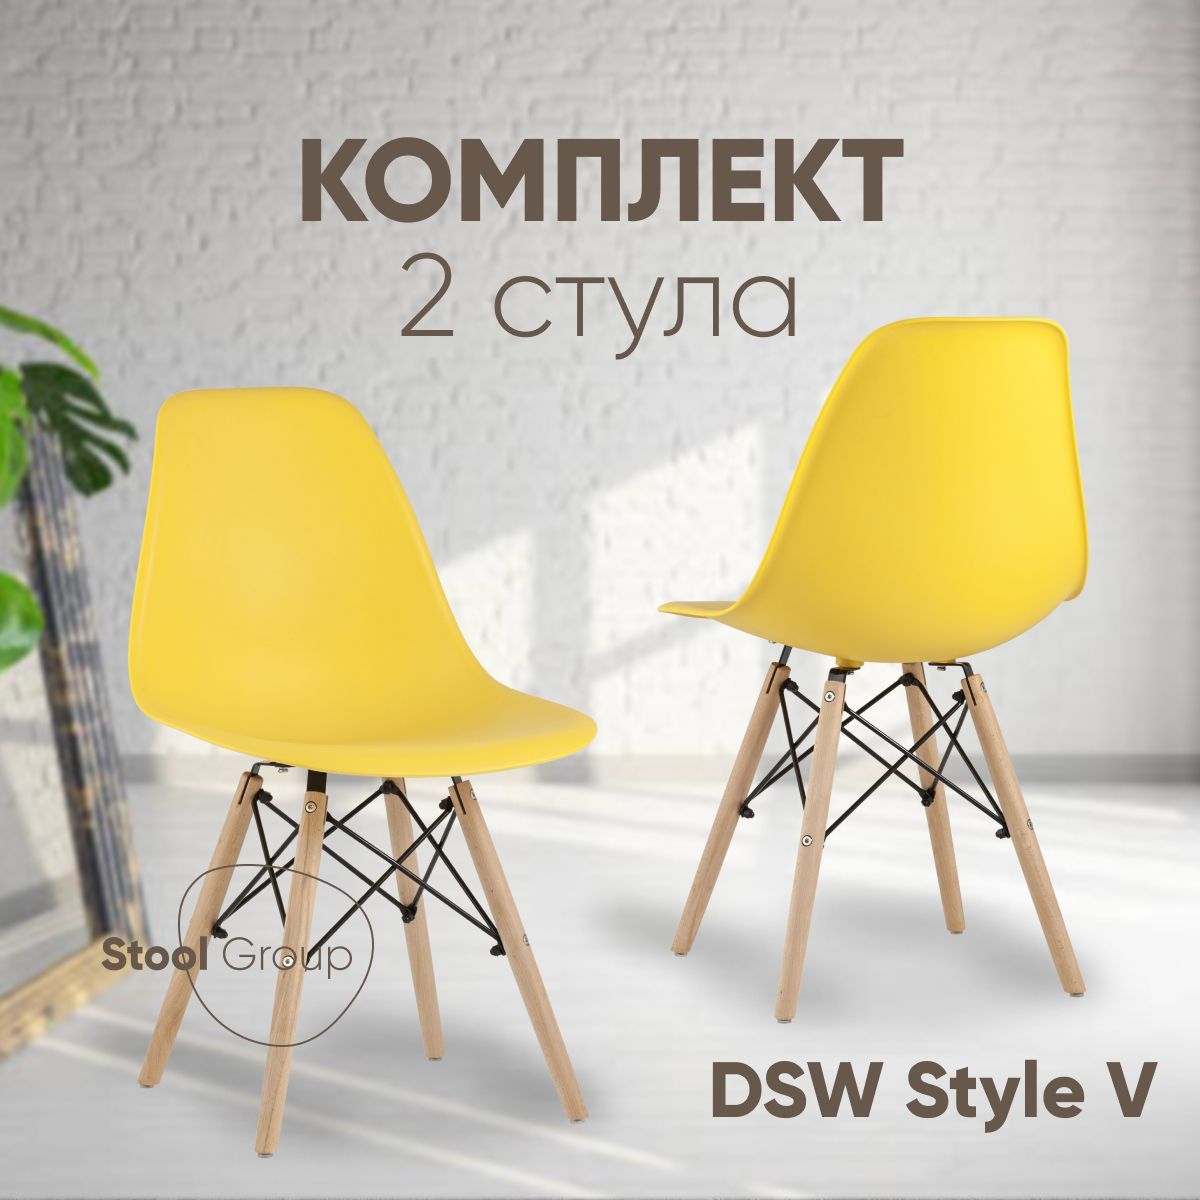 Стул для кухни Stool Group Dsw Style V желтый, разборный фрейм 2 шт - купить в Москве, цены на Мегамаркет | 600015794865